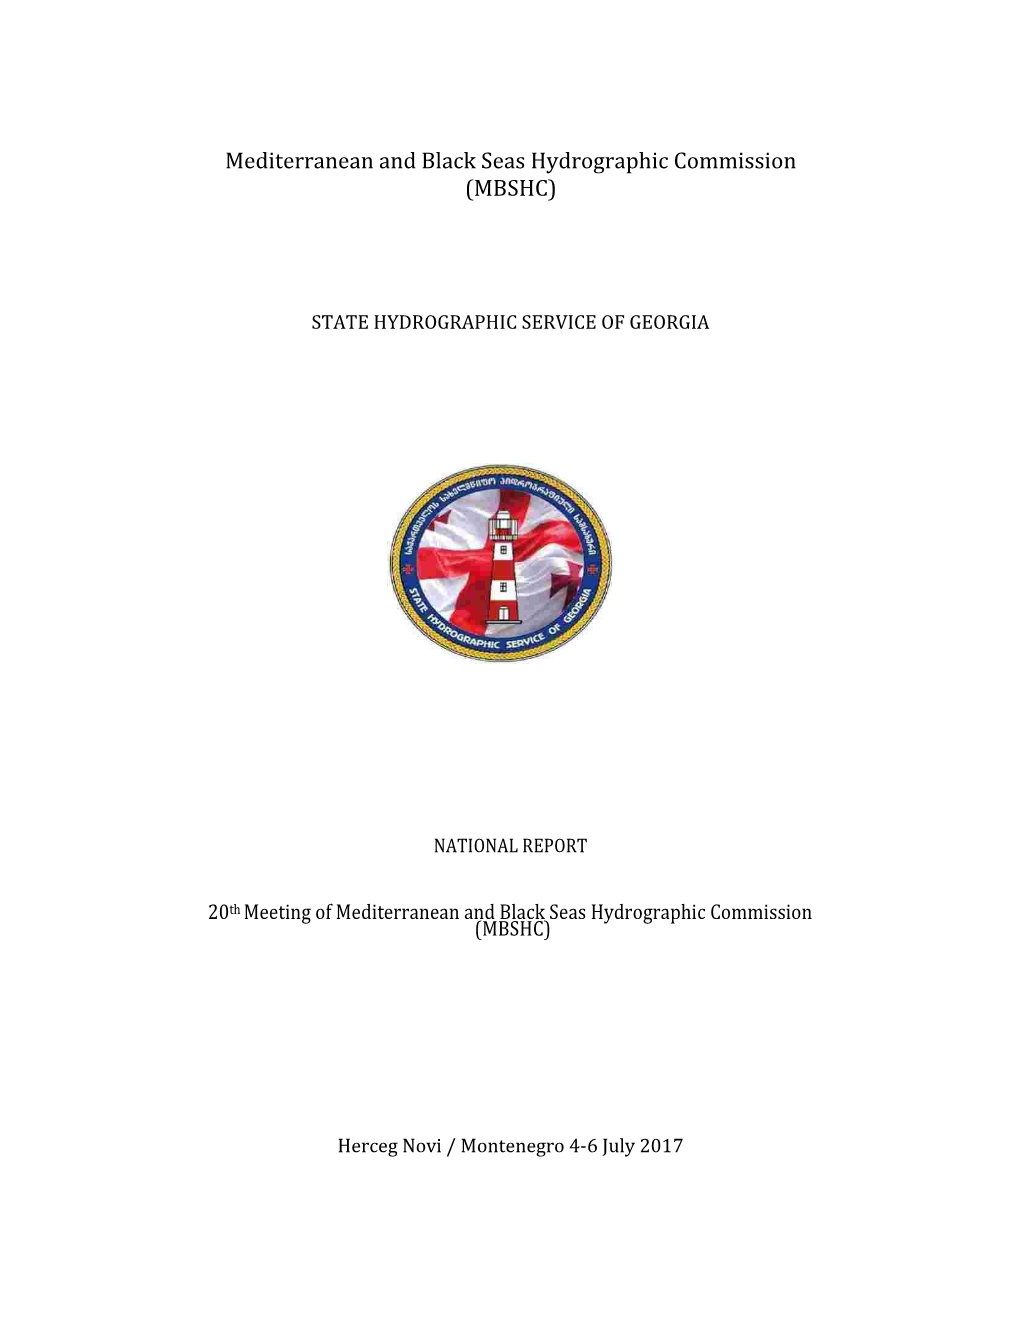 Mediterranean and Black Seas Hydrographic Commission (MBSHC)